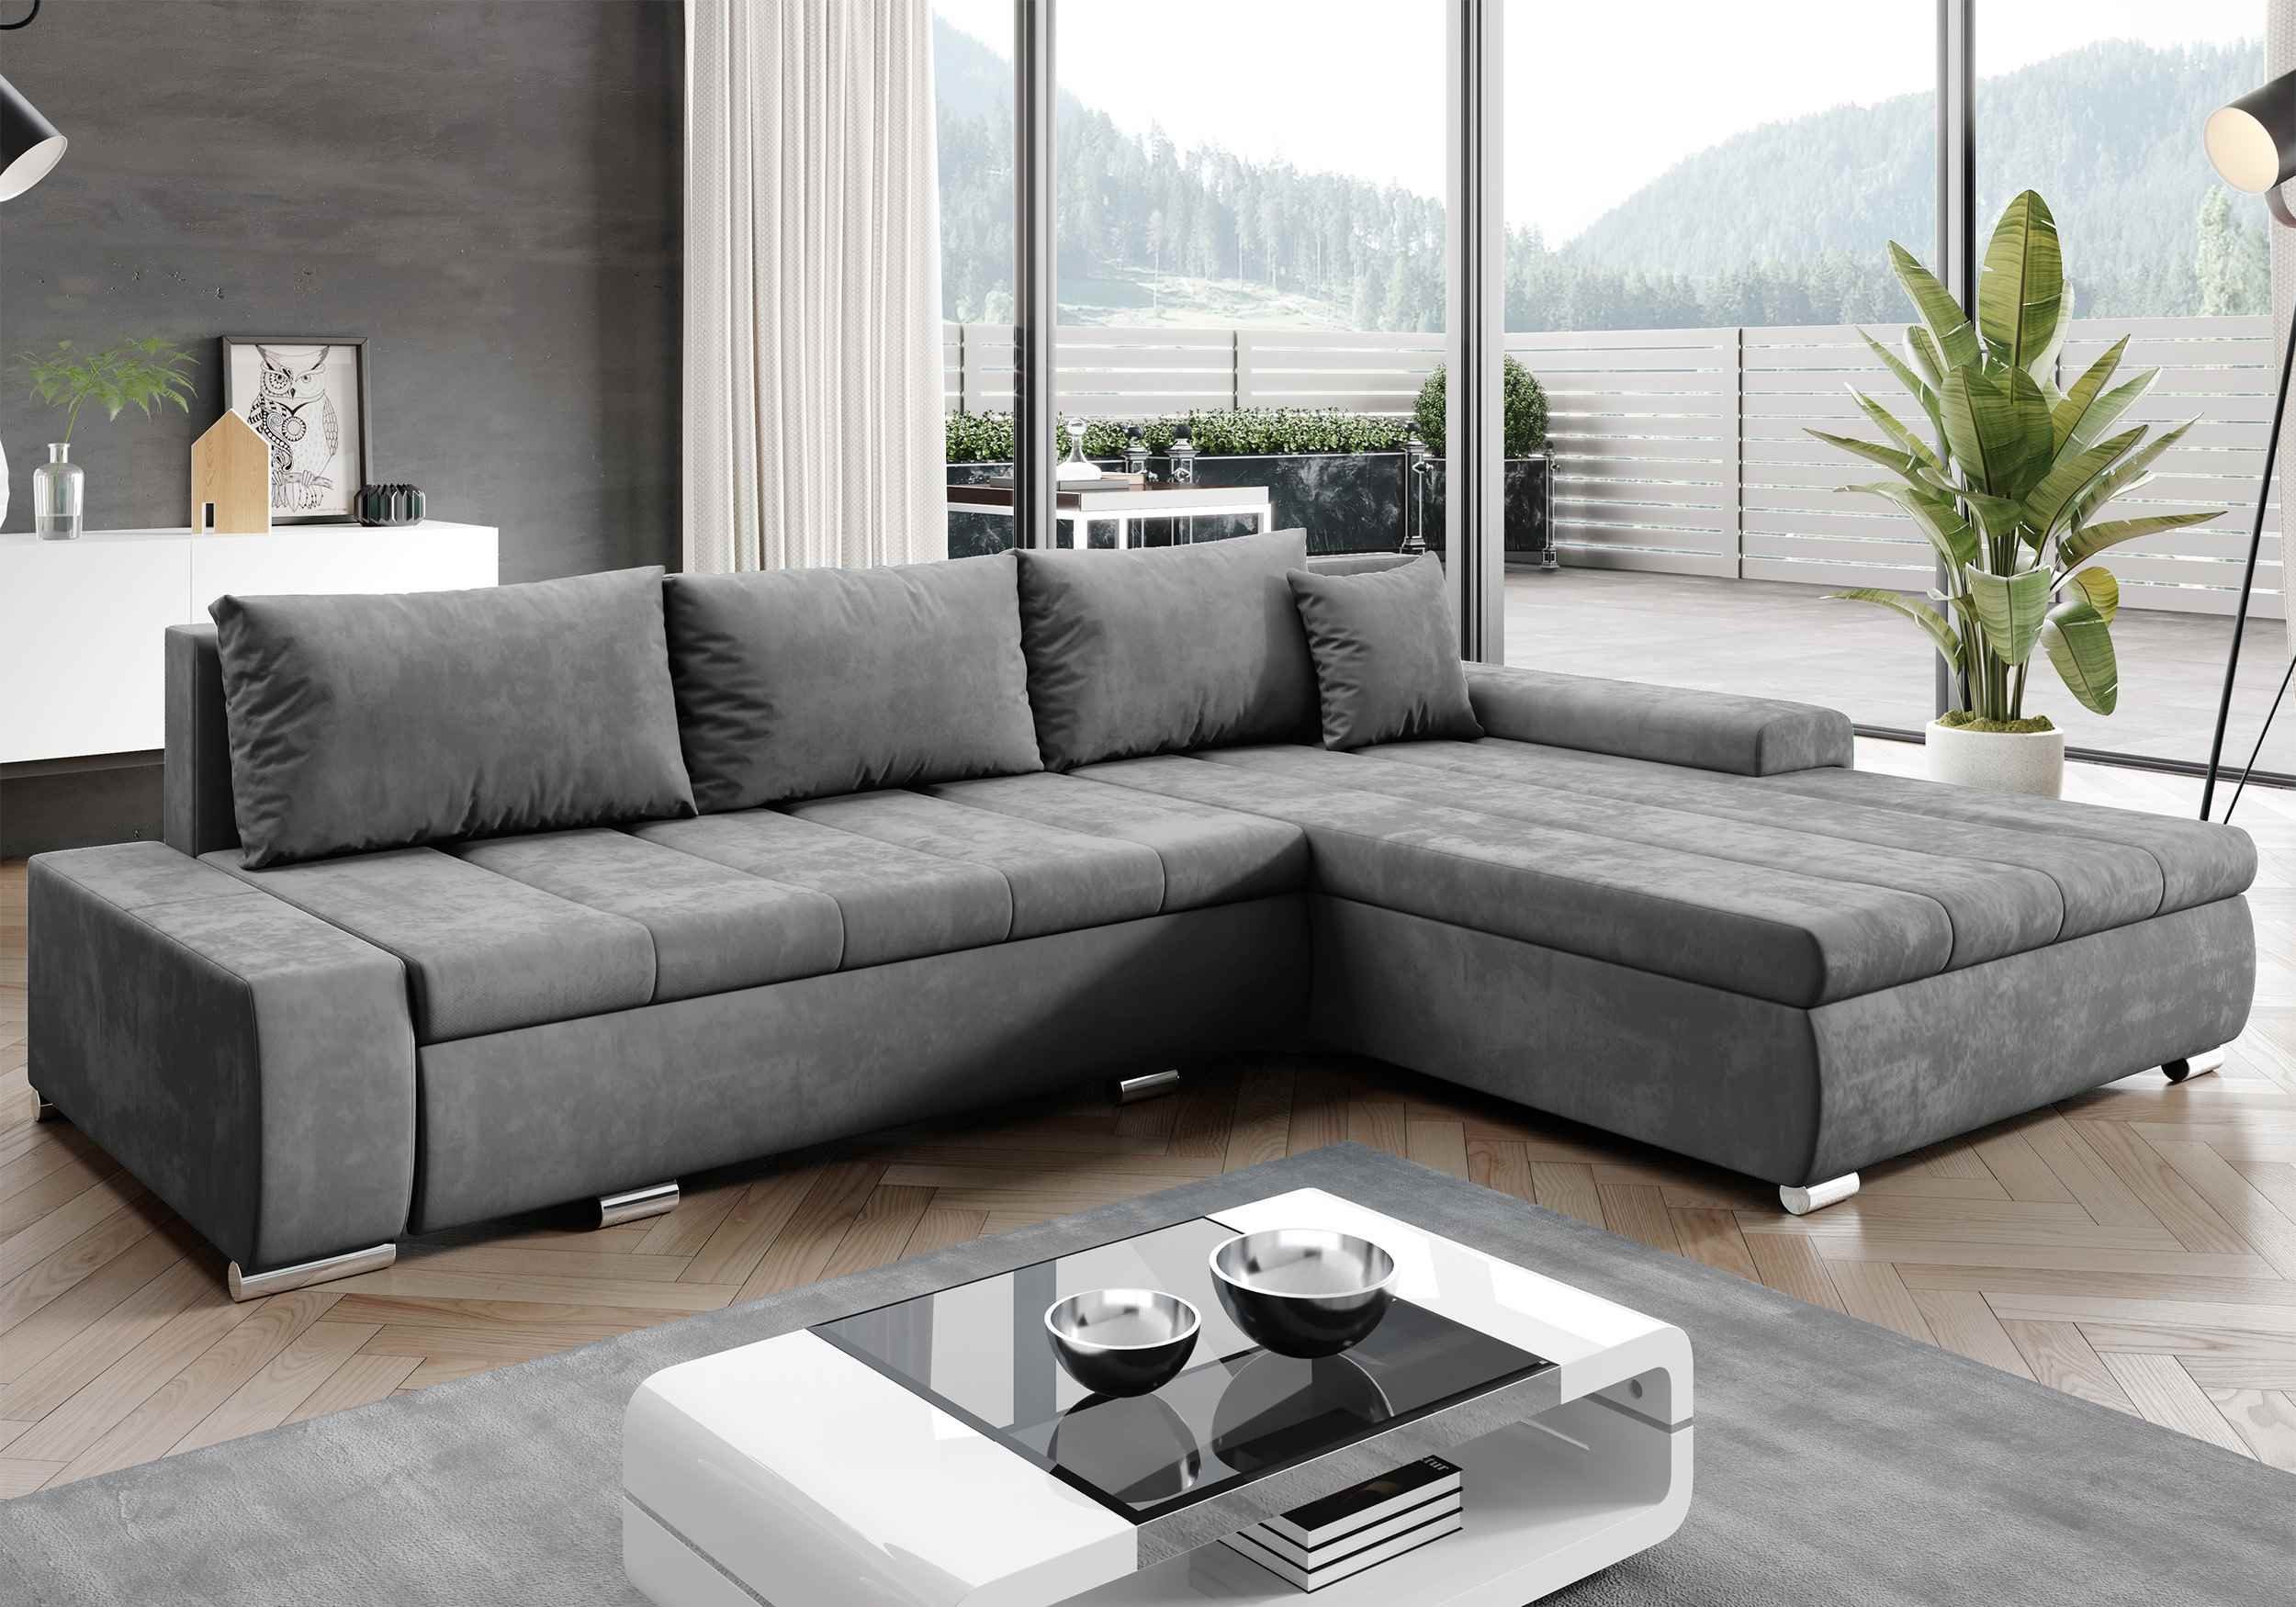 Furnix Ecksofa TOMMASO Sofa Schlaffunktion MH84 Grau Couch, B297 H85 in hochwertig, Kissen Bettkasten x T210 cm, x mit EU Stoff Made